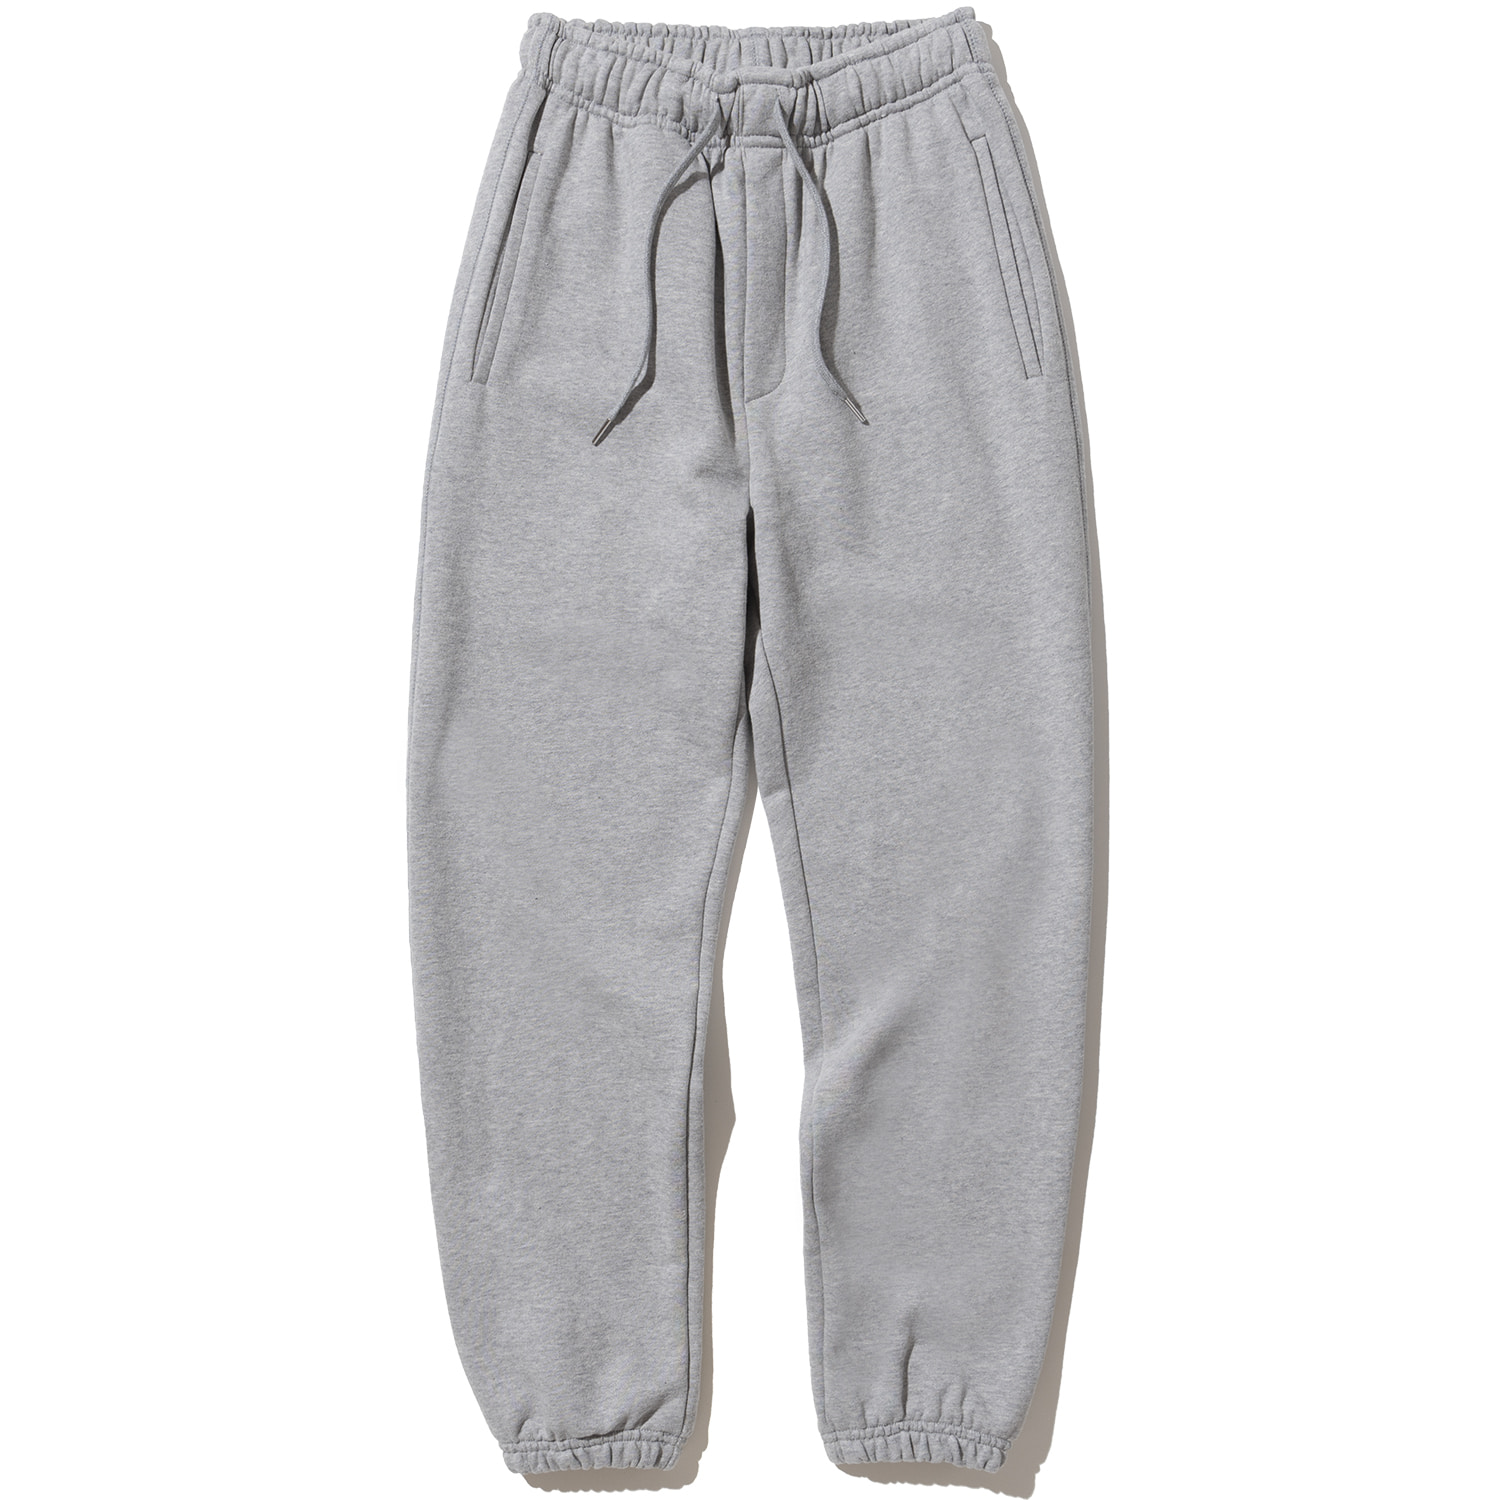 Sweat Jogger Pants - Grey,NOT4NERD